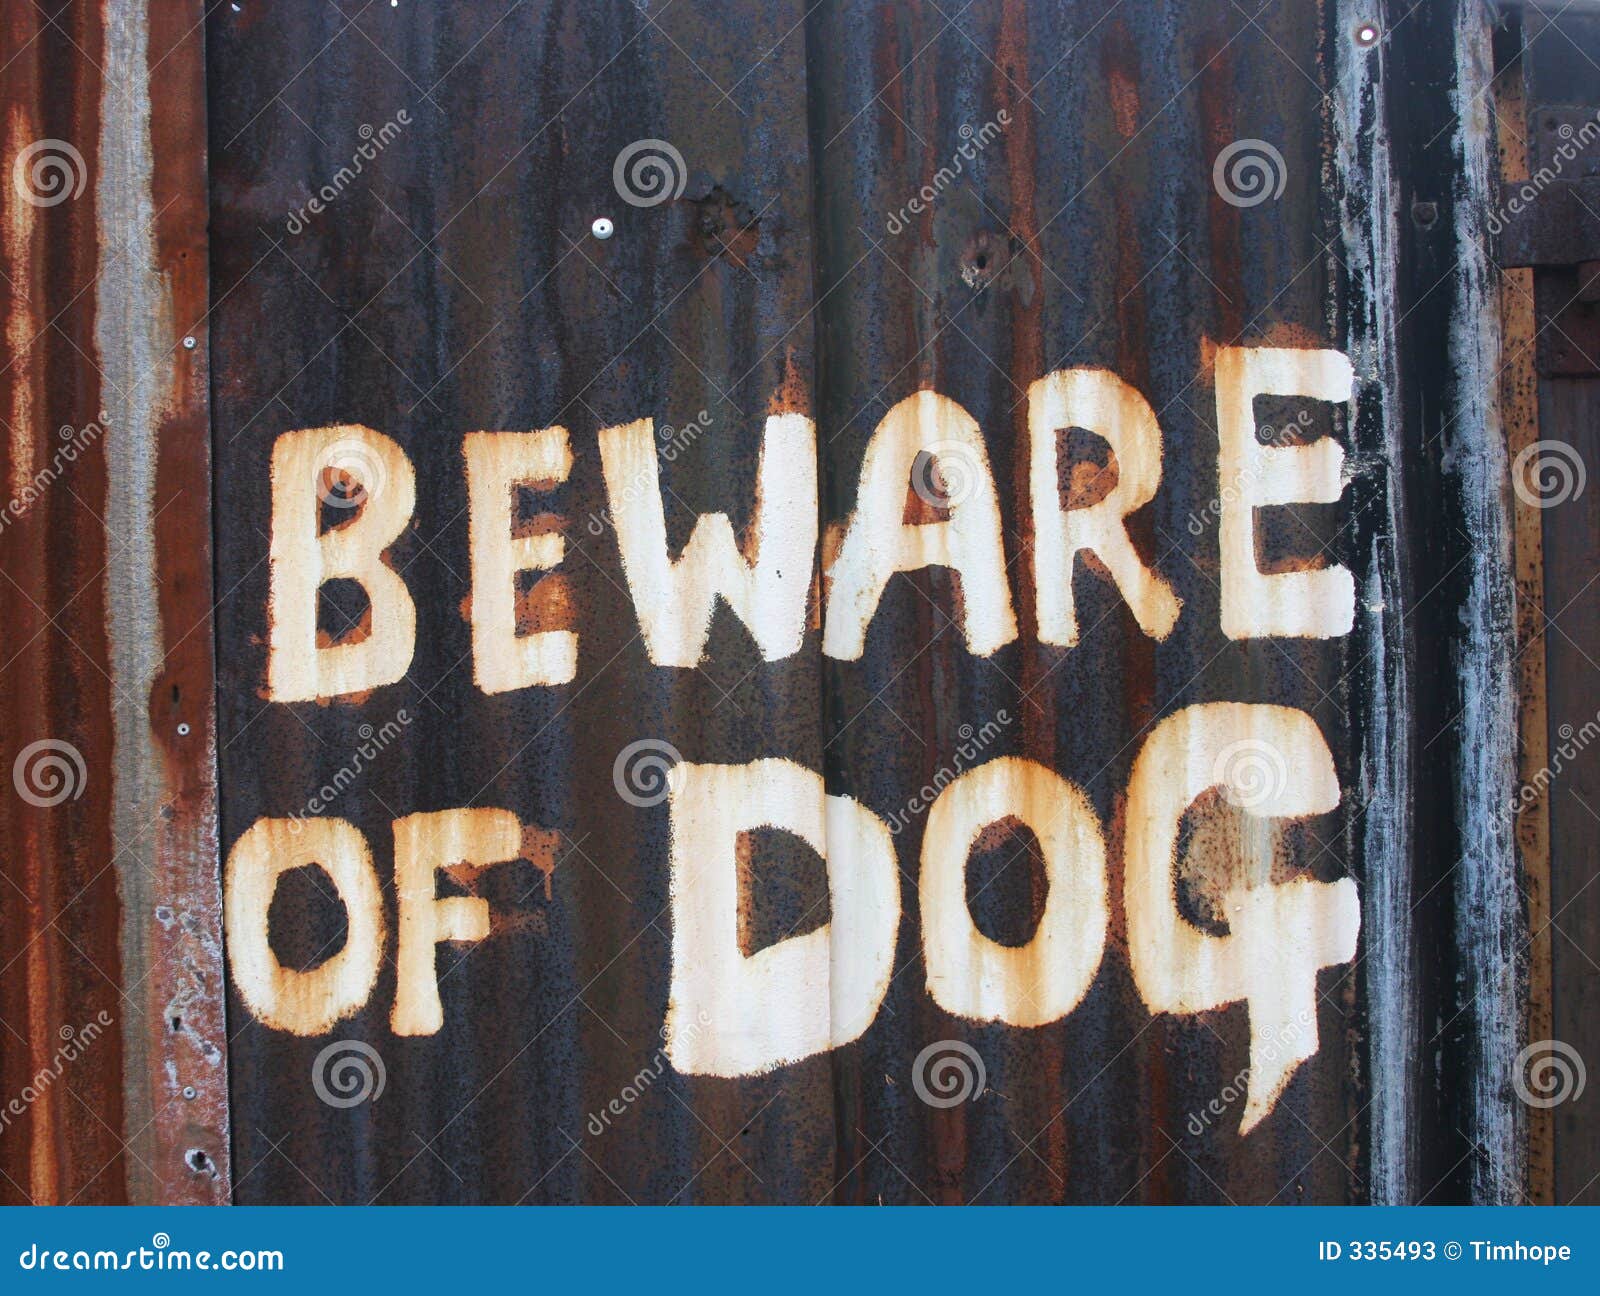 beware of the dog